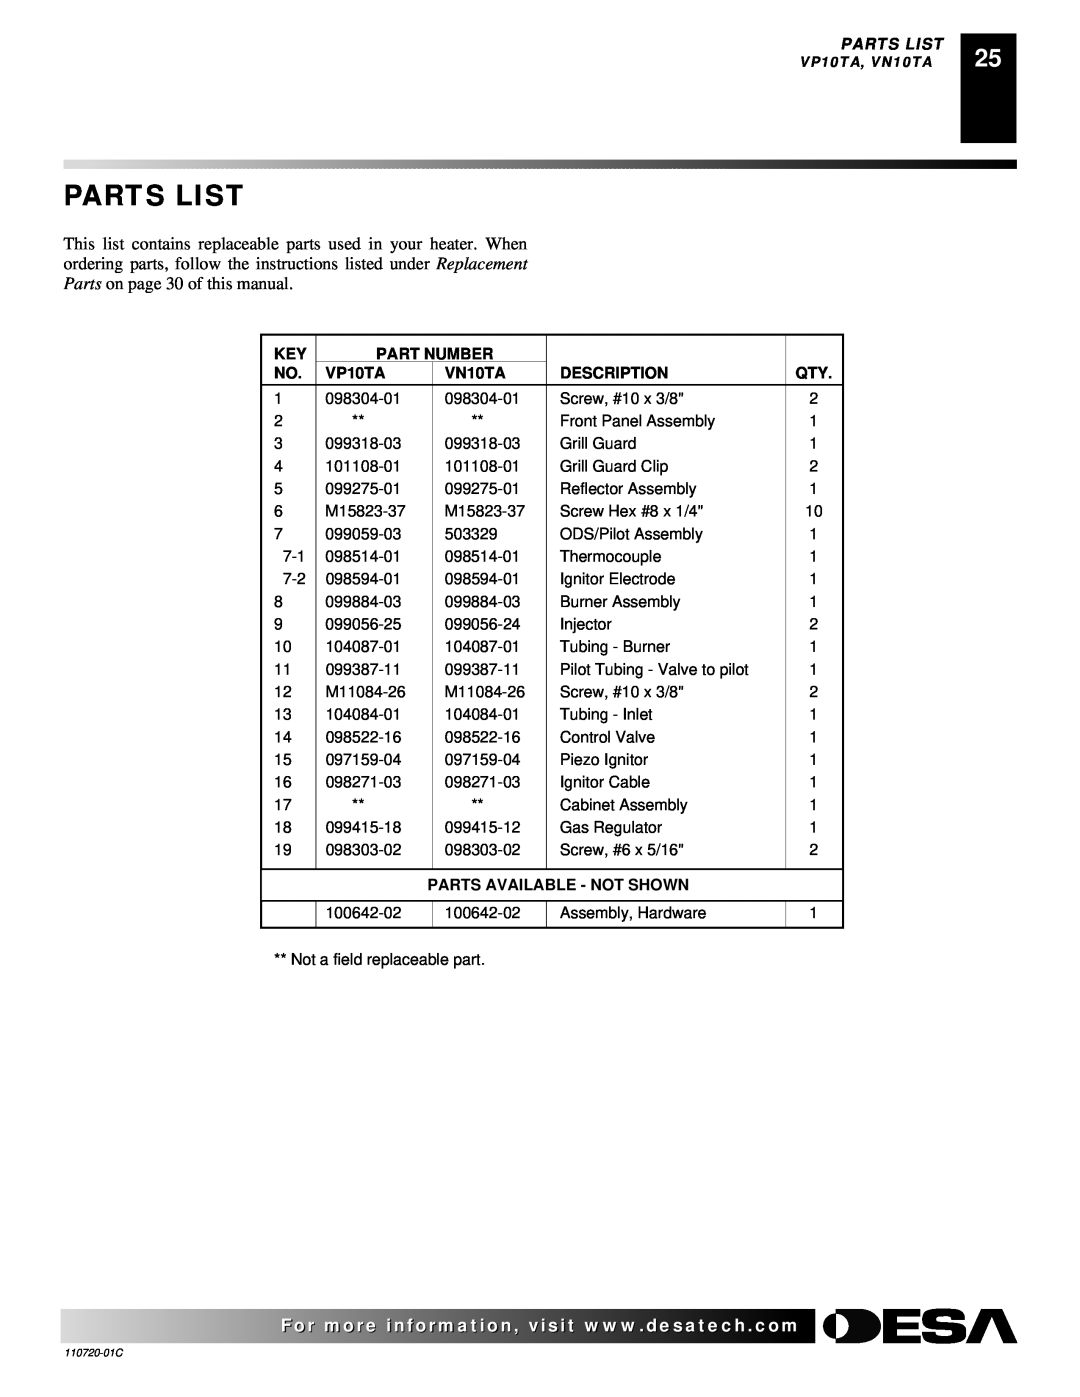 Desa VN10A installation manual Parts List, Part Number, VP10TA, VN10TA, Description, Parts Available - Not Shown 